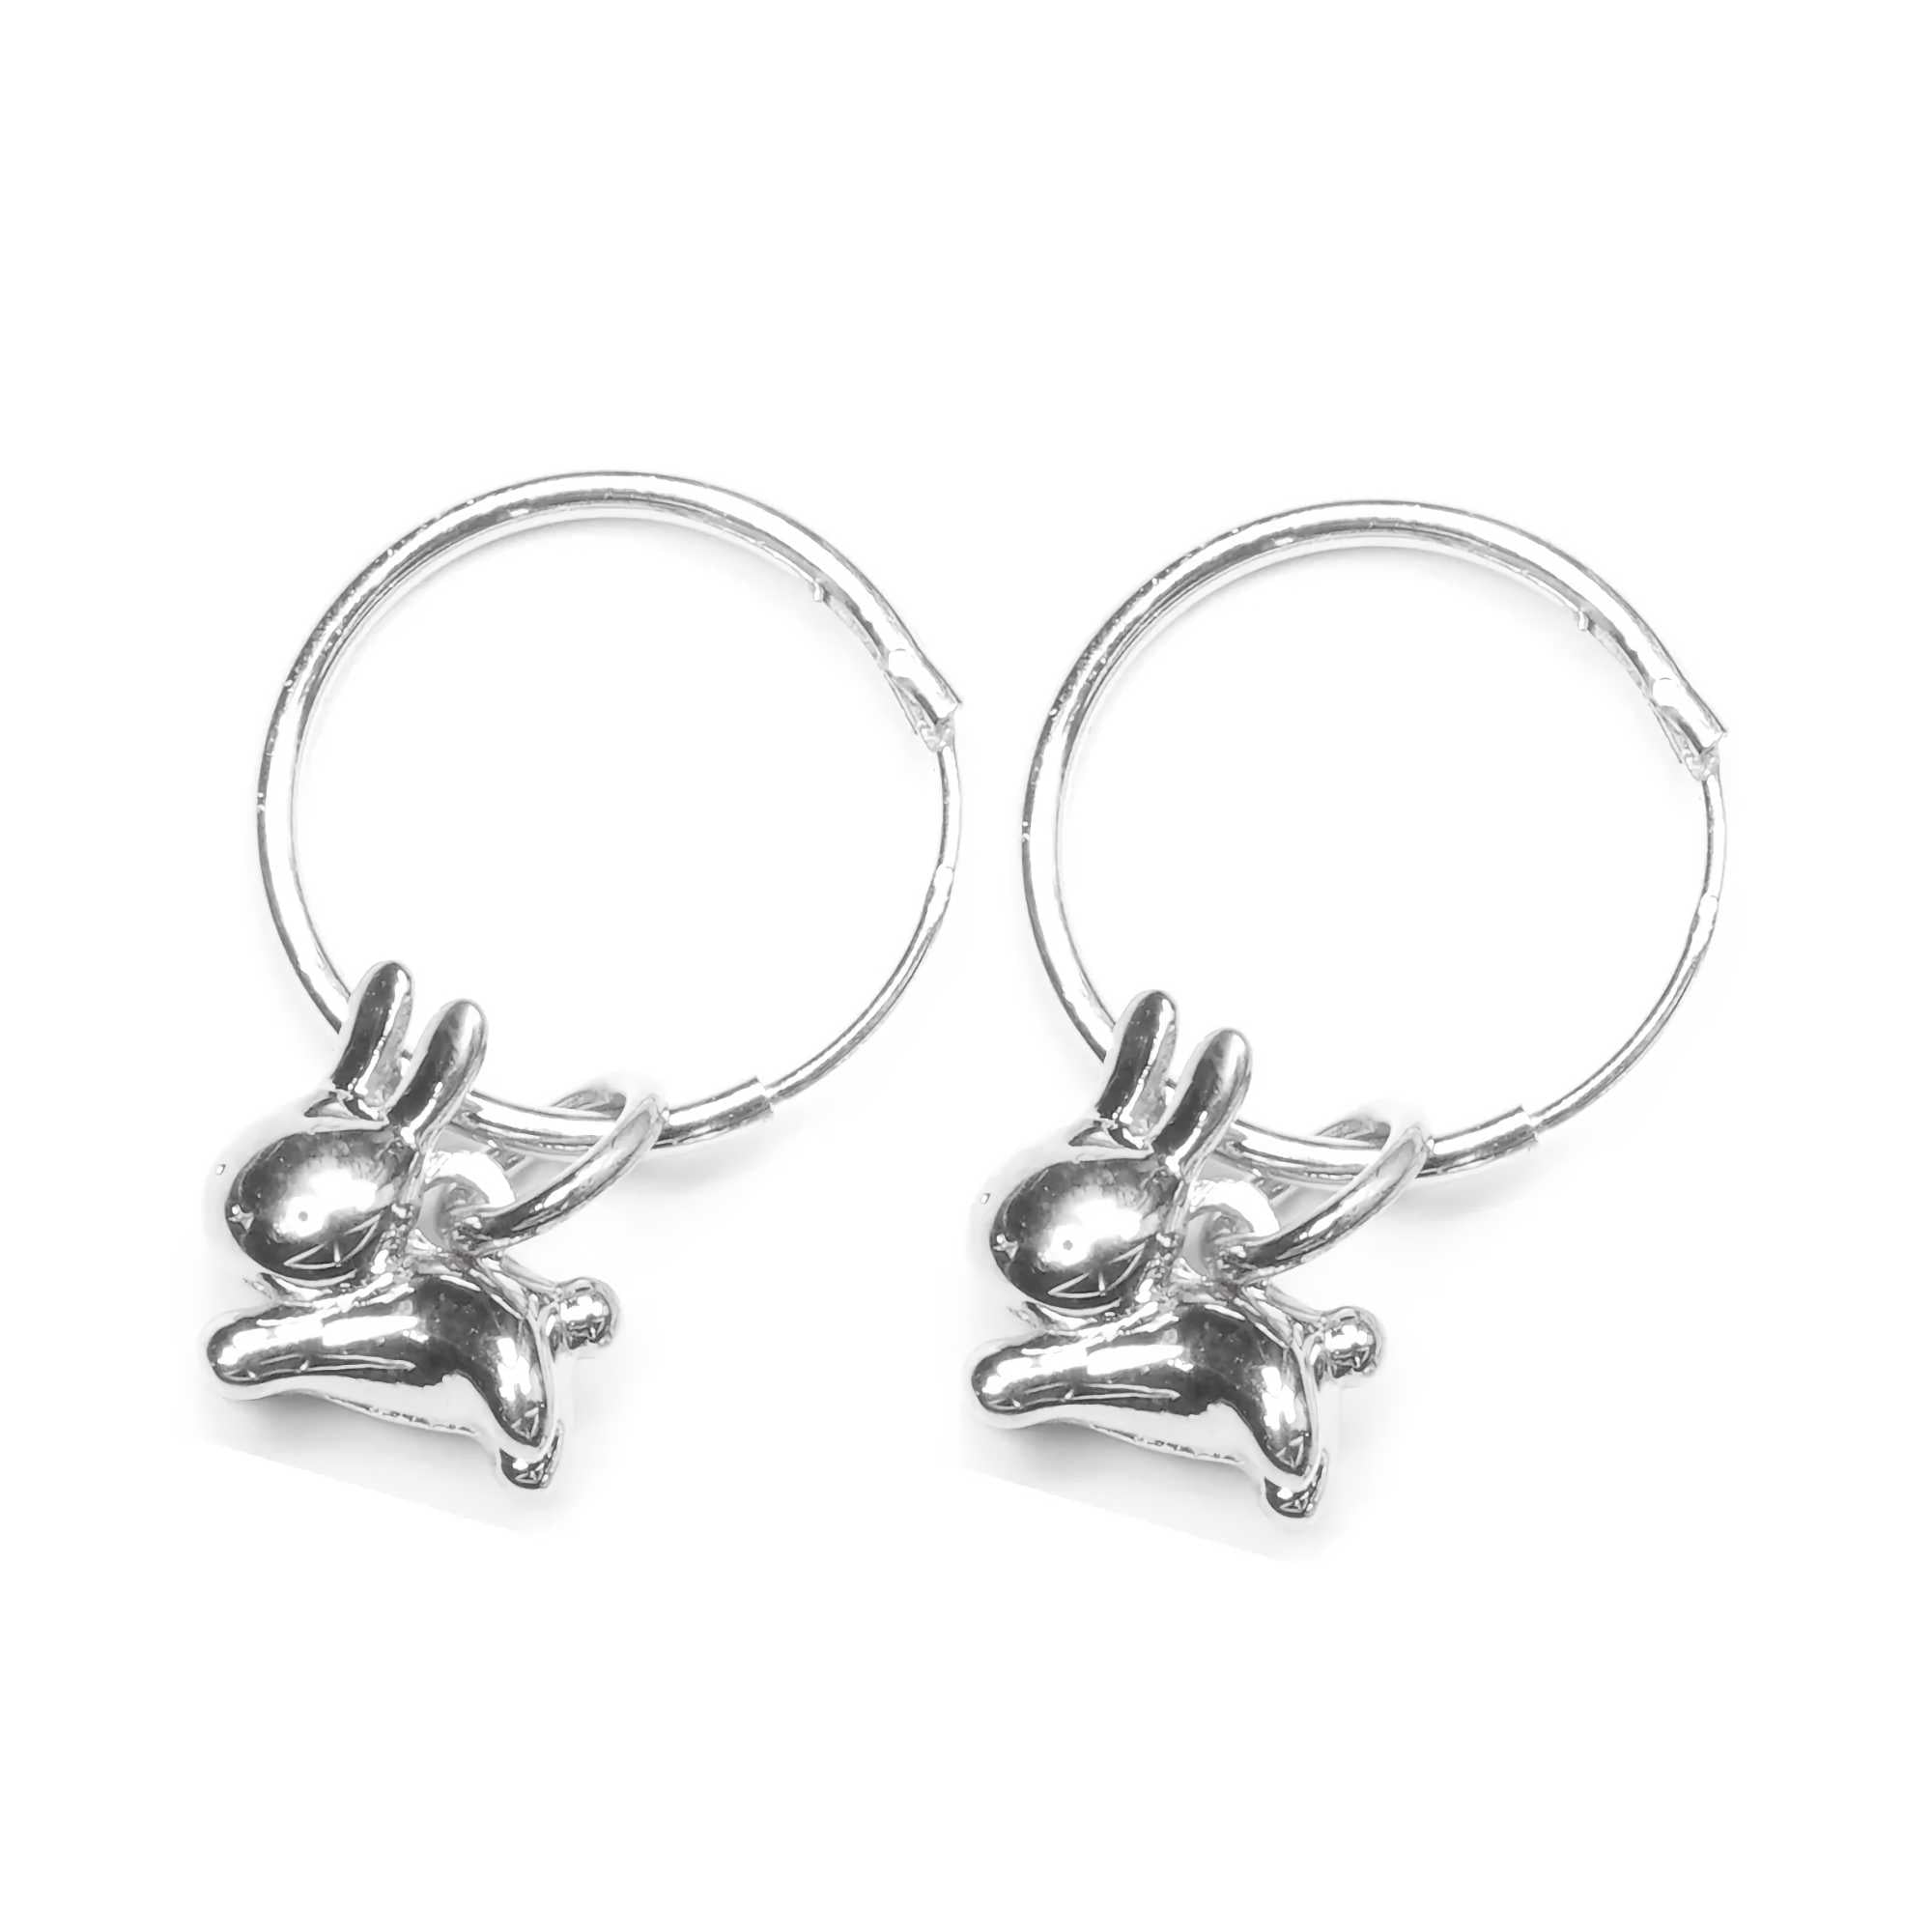 Miffy Leaping Rabbit Hoop Earrings, 925 Sterling Silver